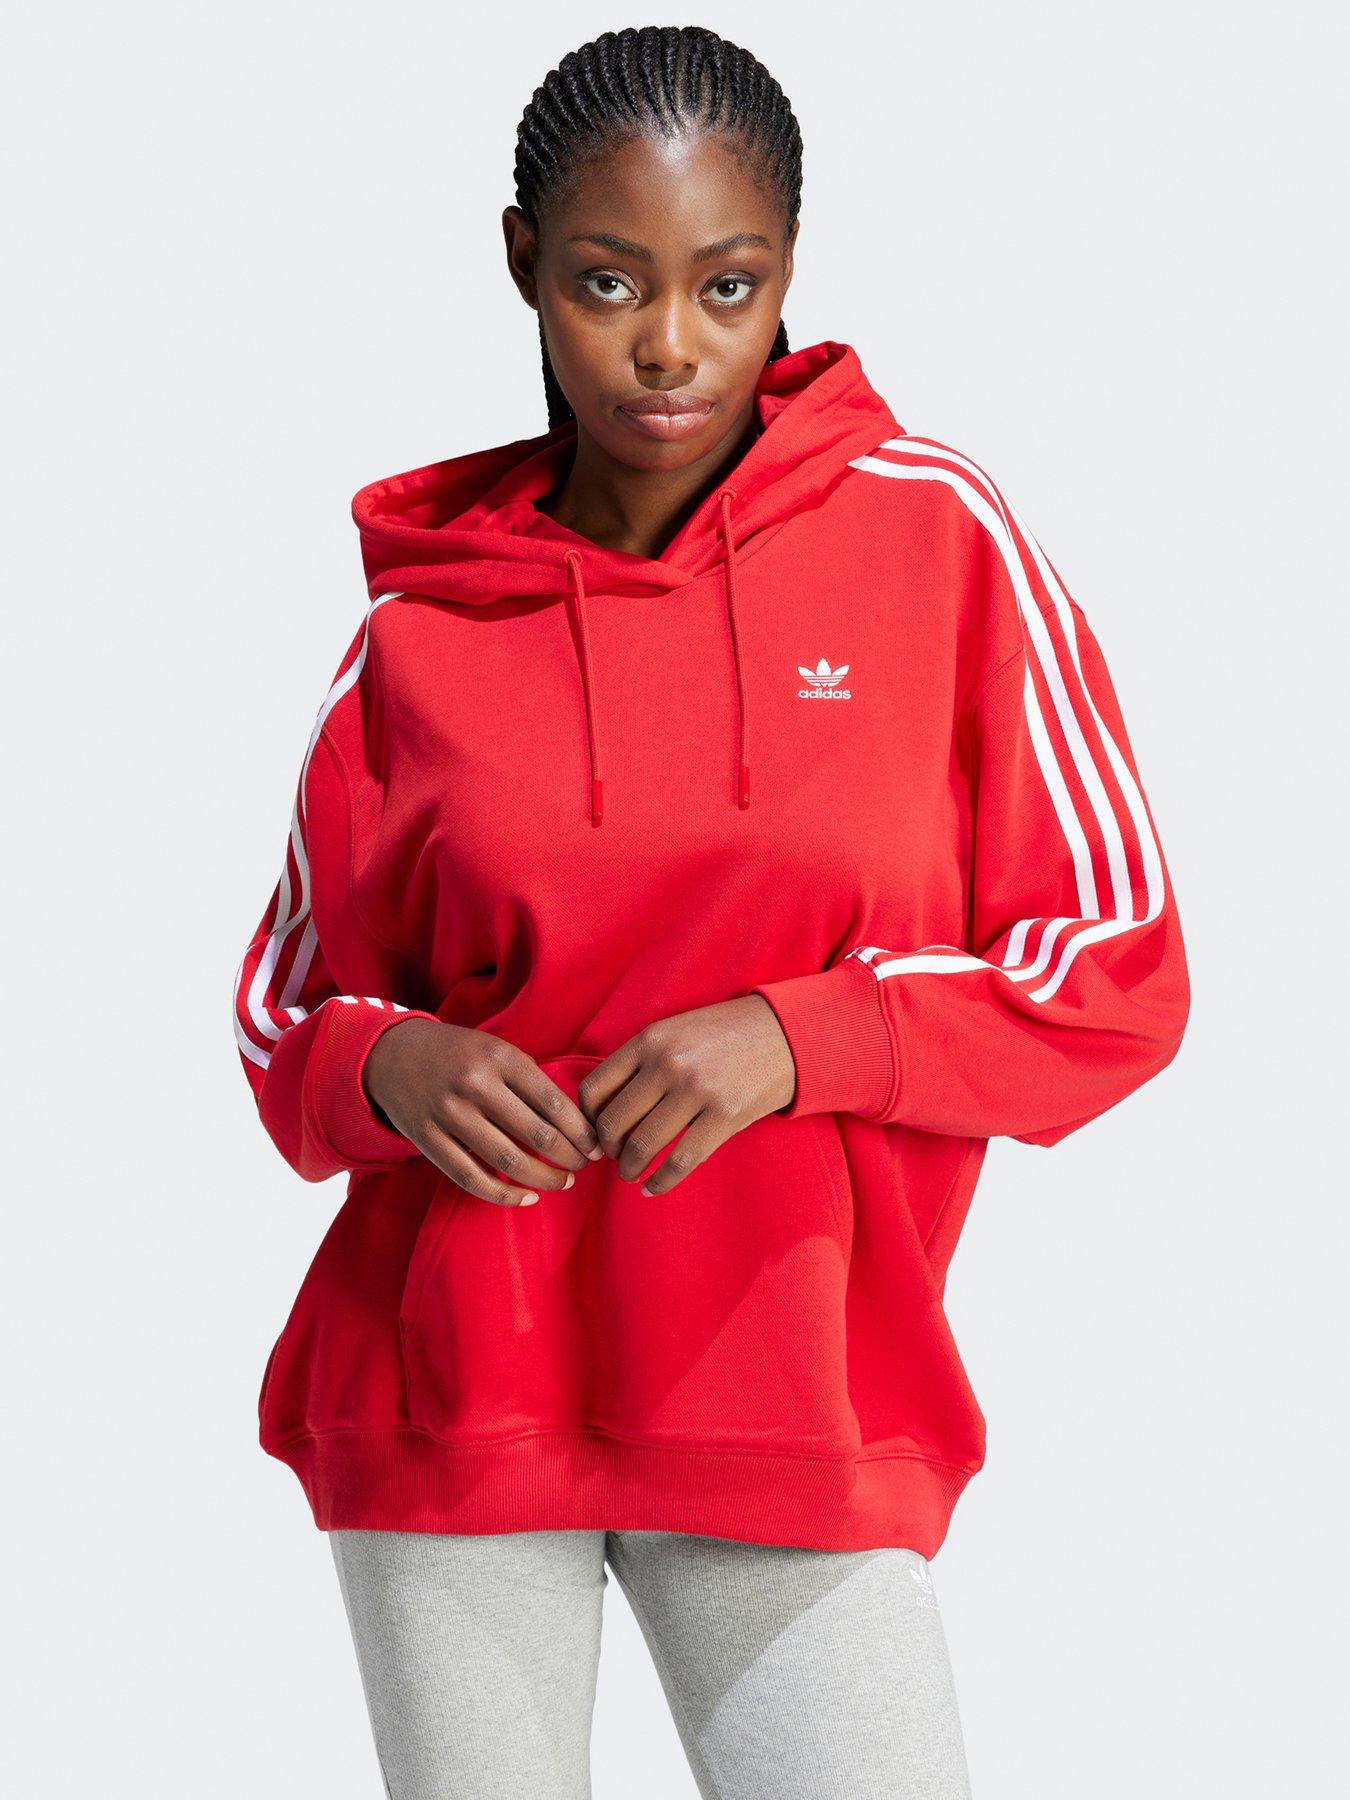 https://media.very.co.uk/i/very/VUEVS_SQ1_0000000017_RED_MDf/adidas-originals-womens-3-stripe-oversized-hoodie-red.jpg?$180x240_retinamobilex2$&$roundel_very$&p1_img=20-off-code